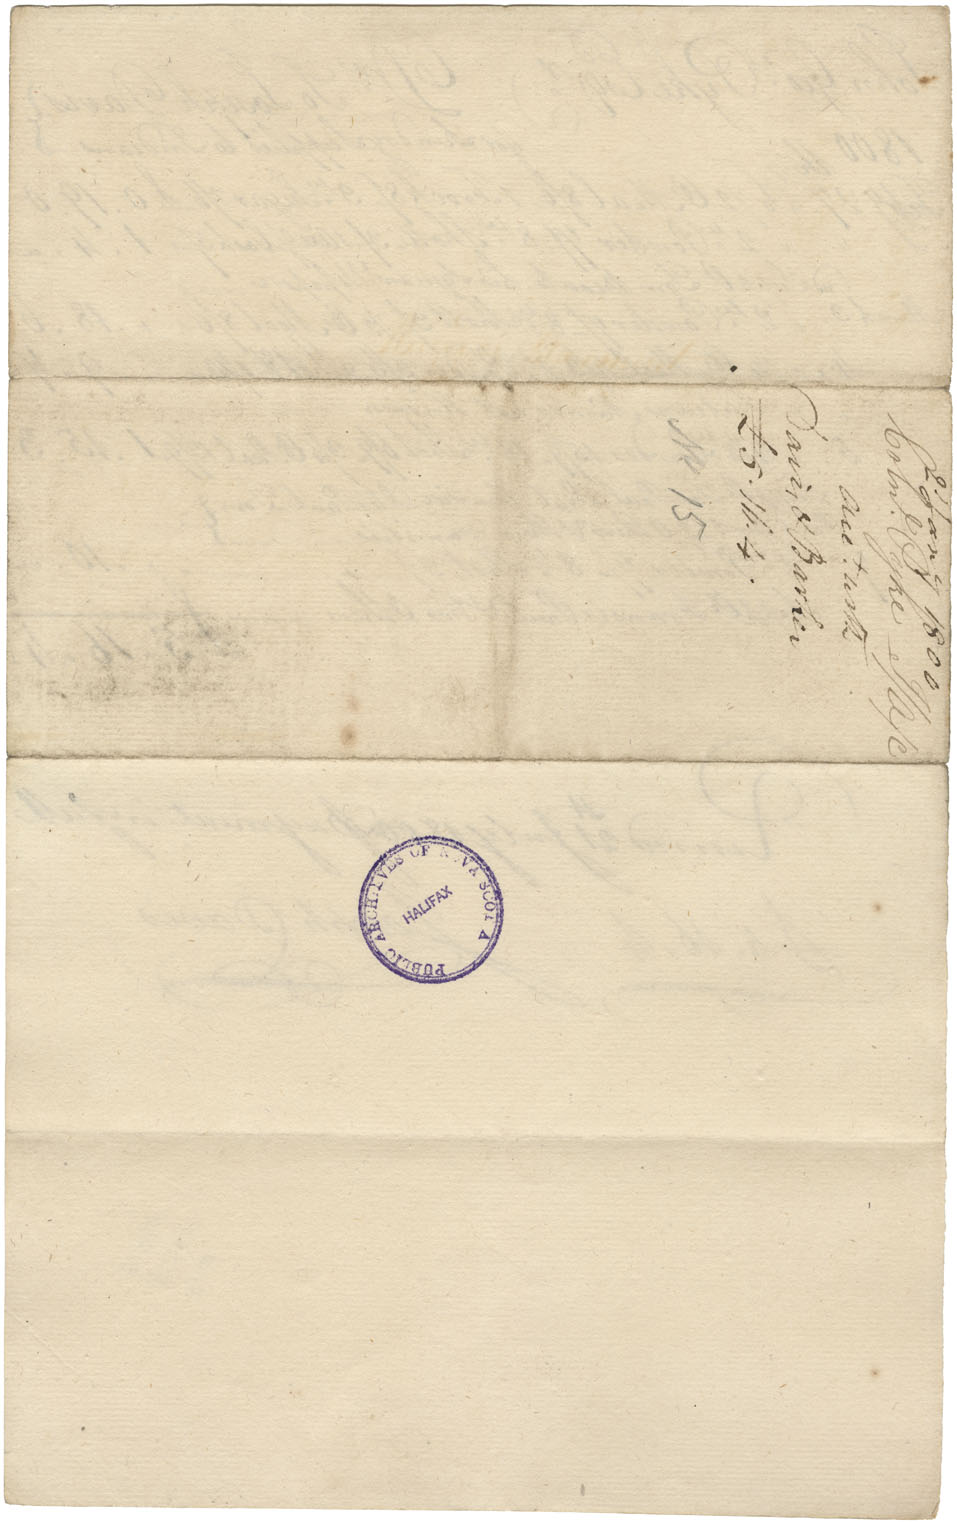 Receipt by Joseph Davis of £5-16-4 for sundry supplies to Mi'kmaq from John Geo. Pyke, 21 July 1800.